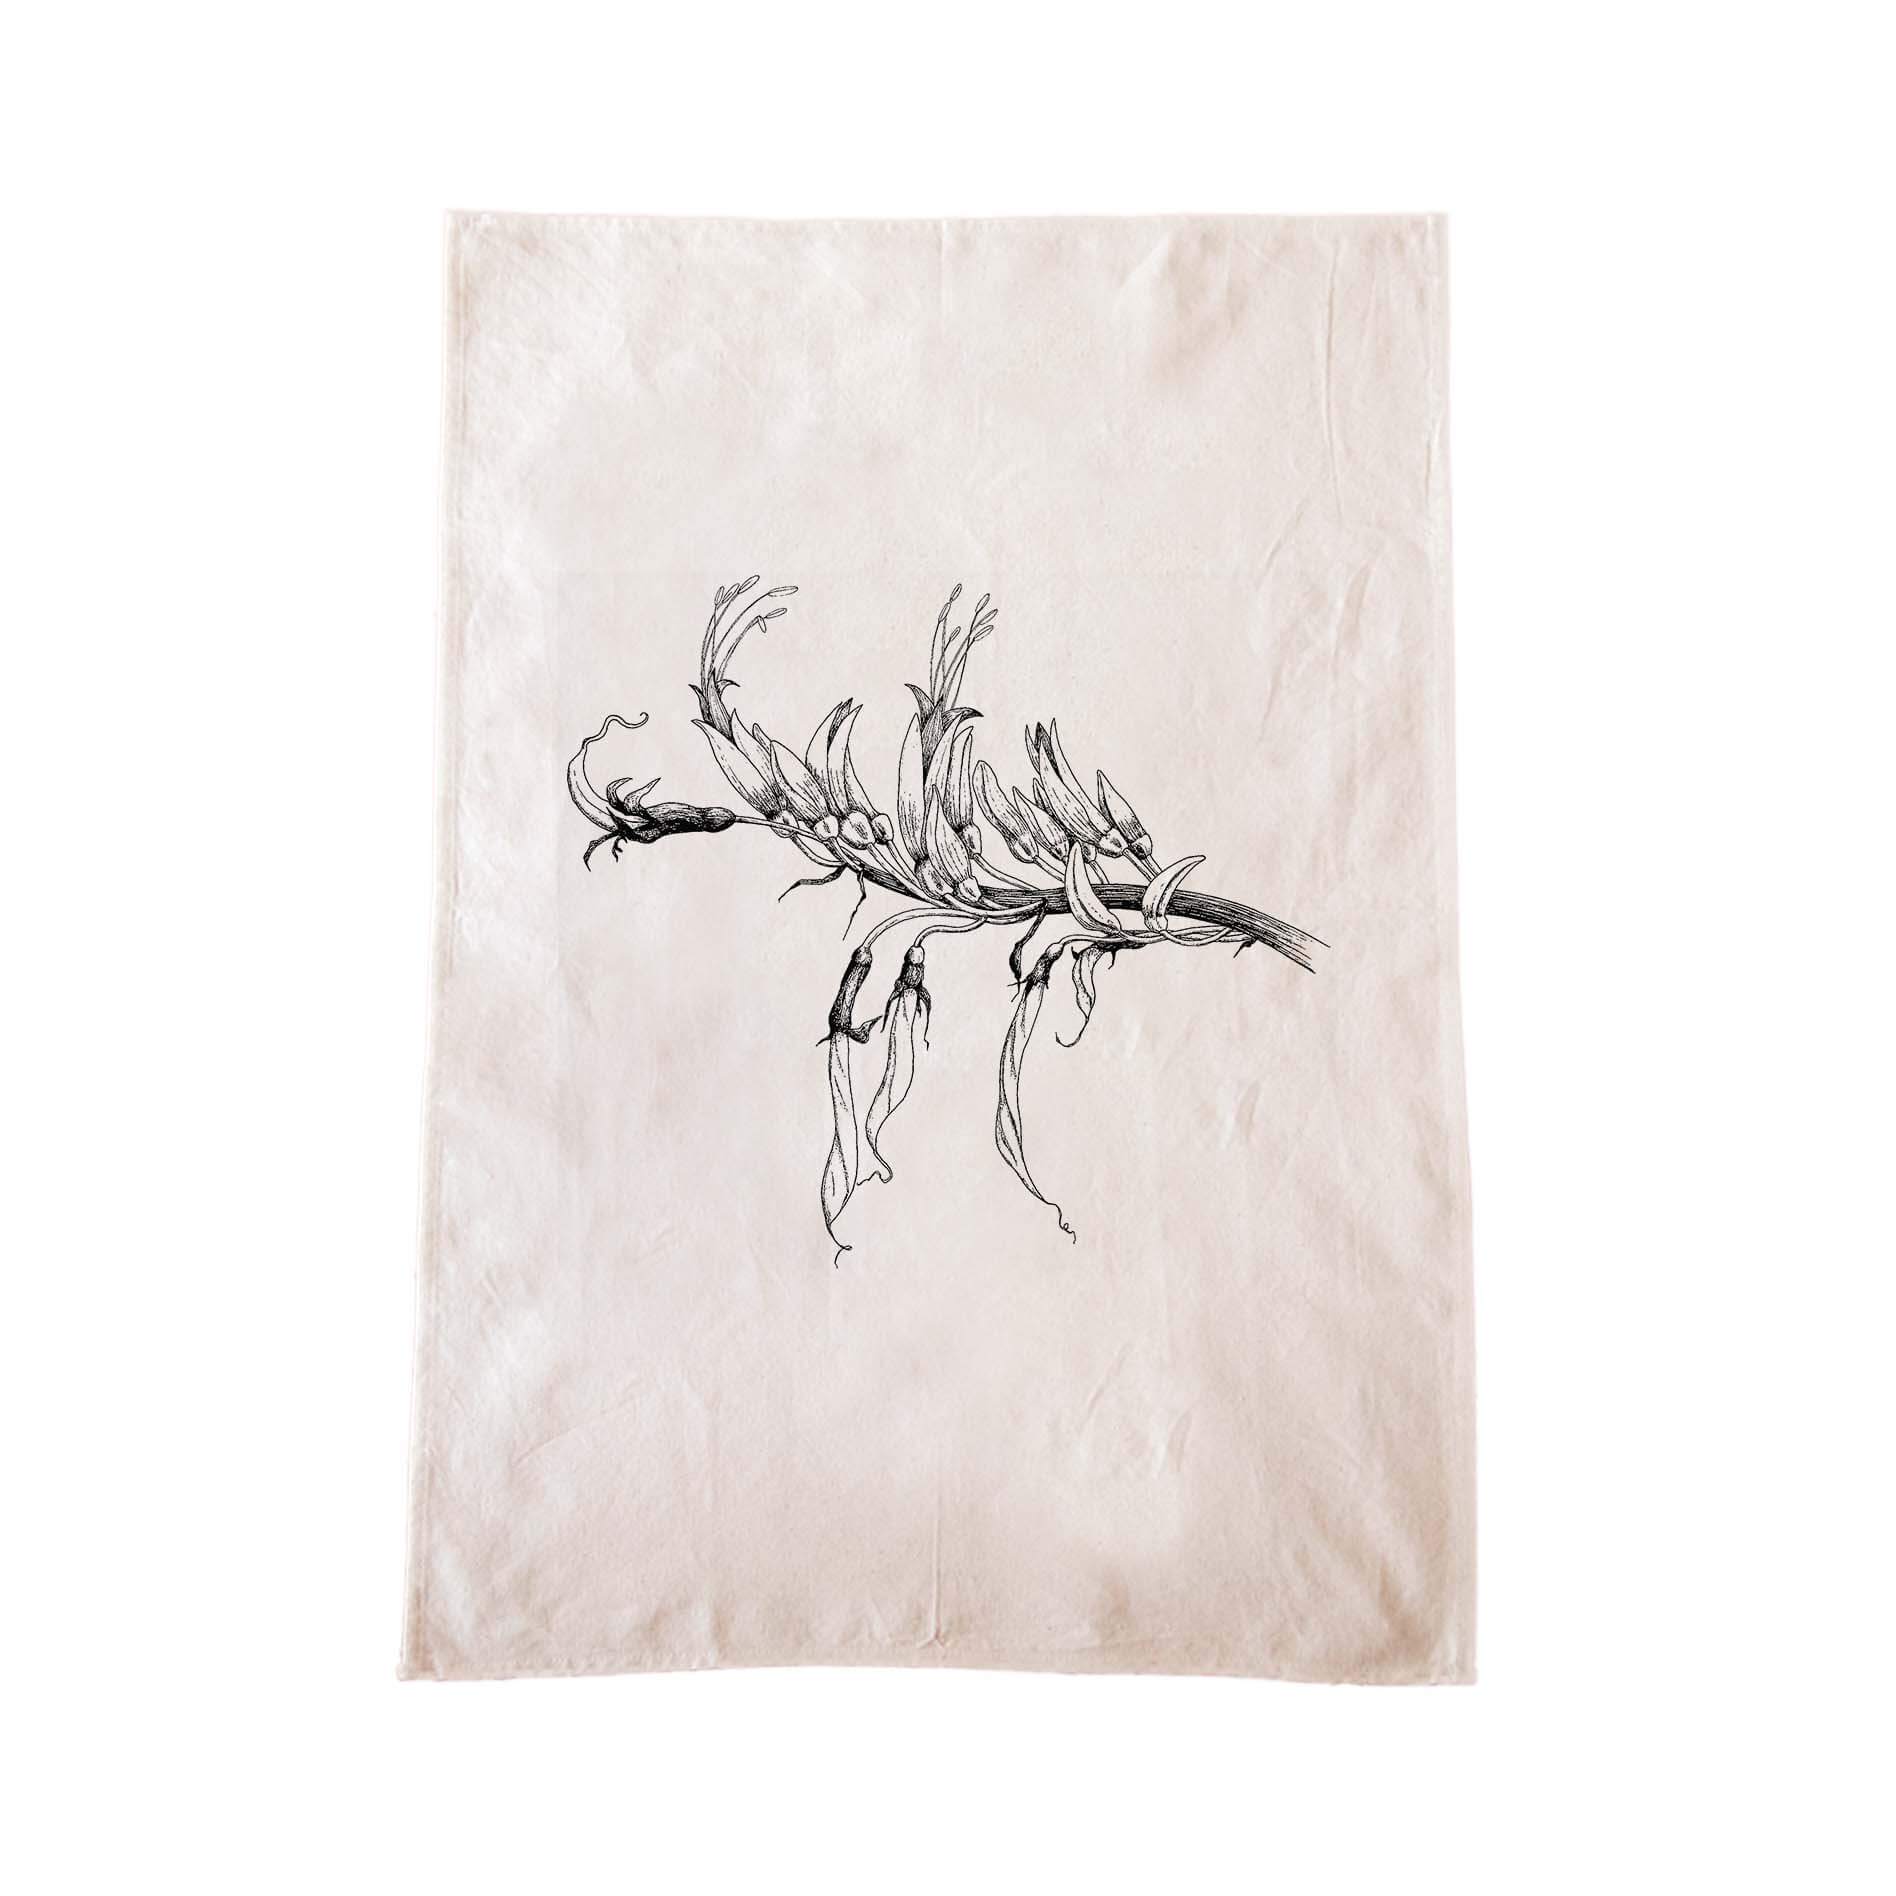 Off-white cotton tea towel with a screen printed Kārearea/NZ Falcon design.